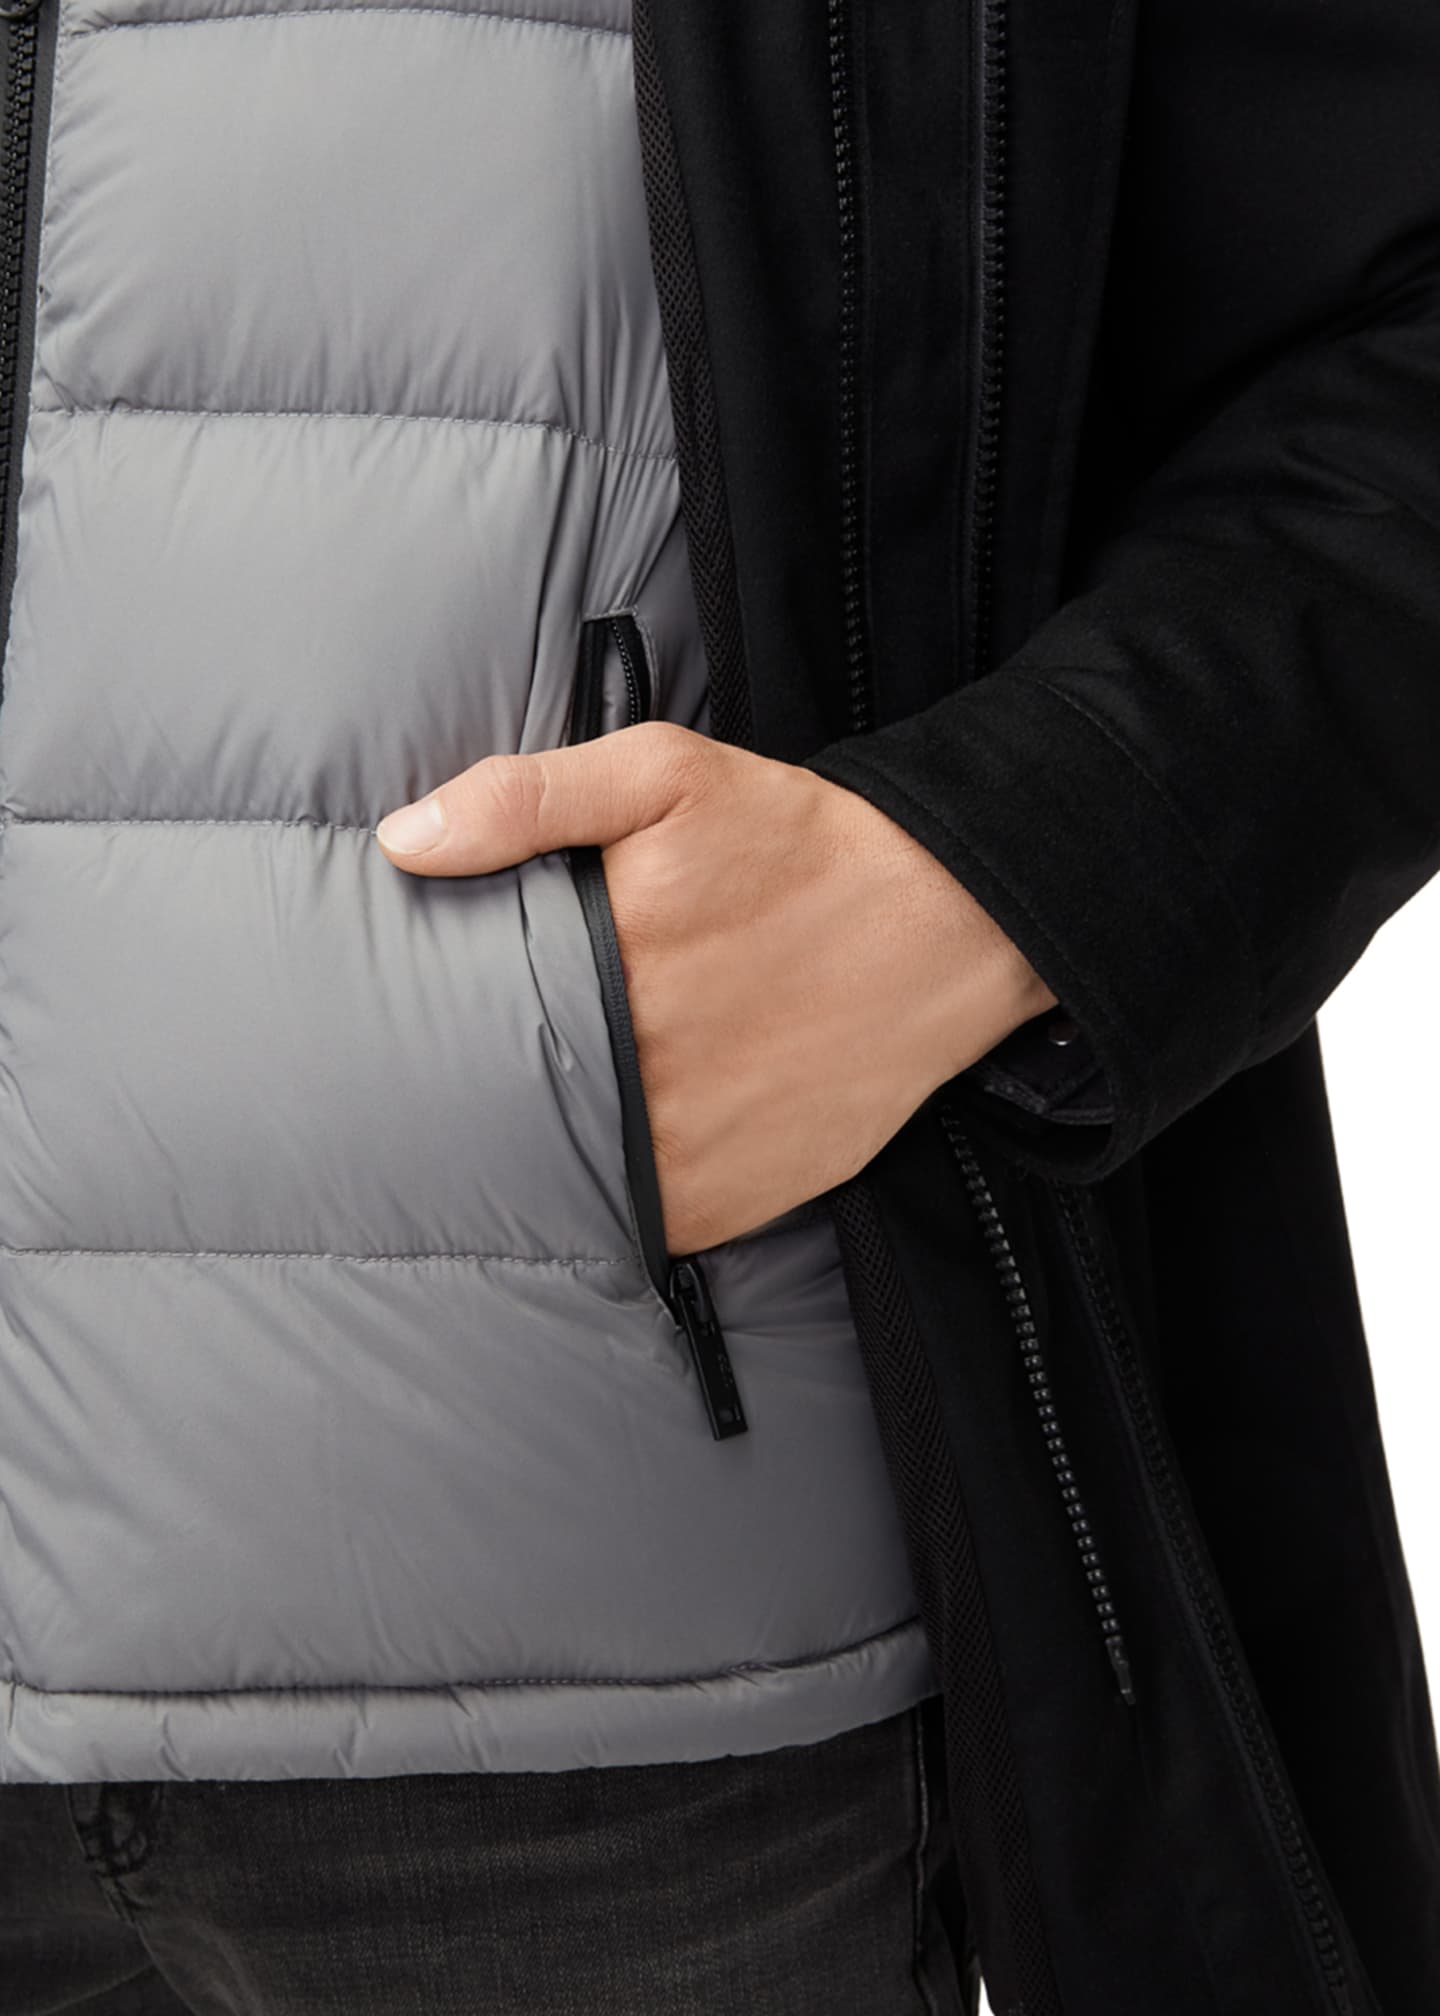 UGG Men's Copeland System Parka Coat with Removable Jacket - Bergdorf ...